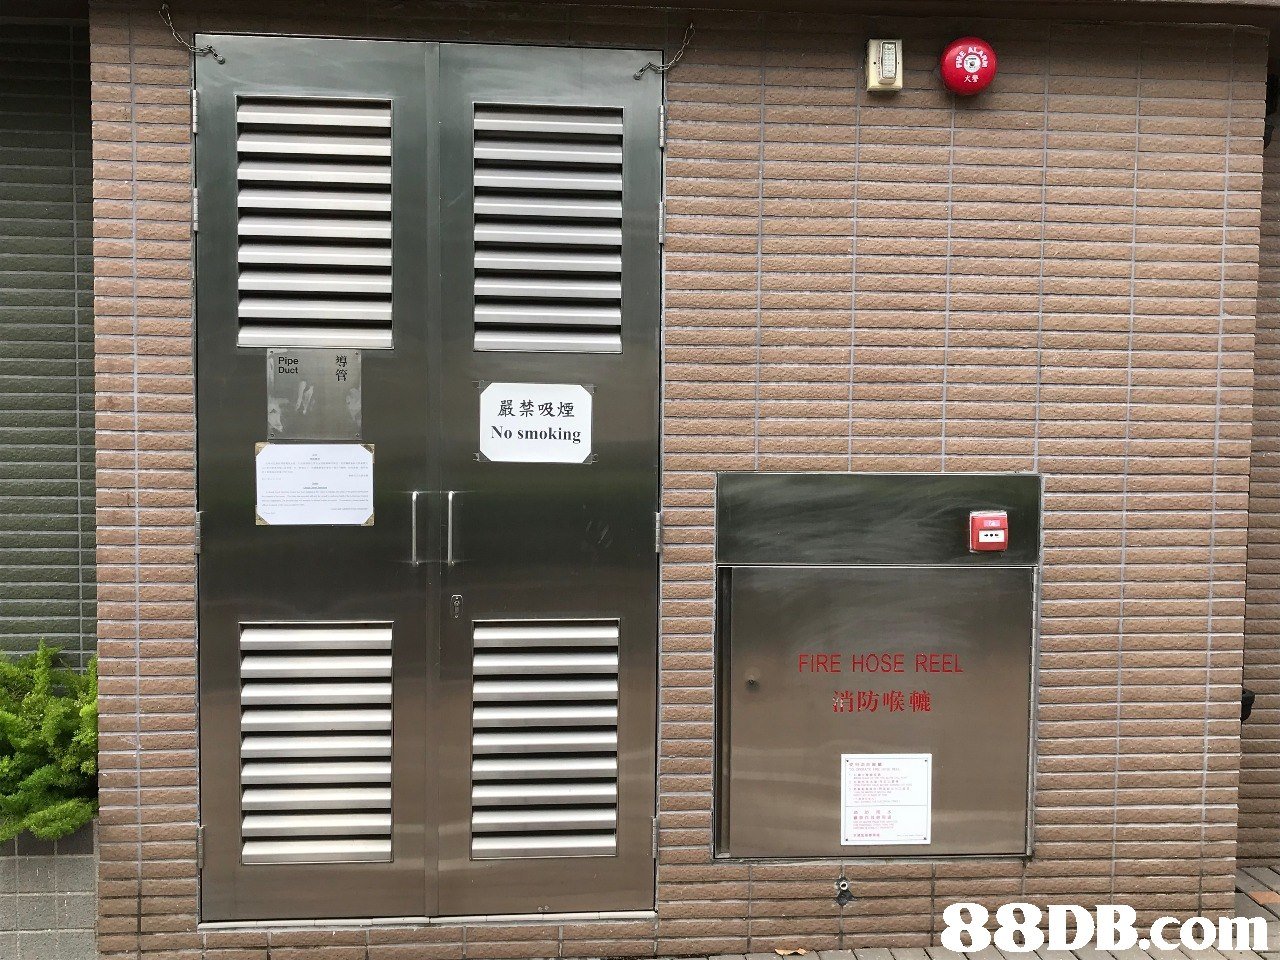 Pipe Duct 嚴禁吸煙 No smoking FIRE HOSE REEL 消防喉轆   door,window,facade